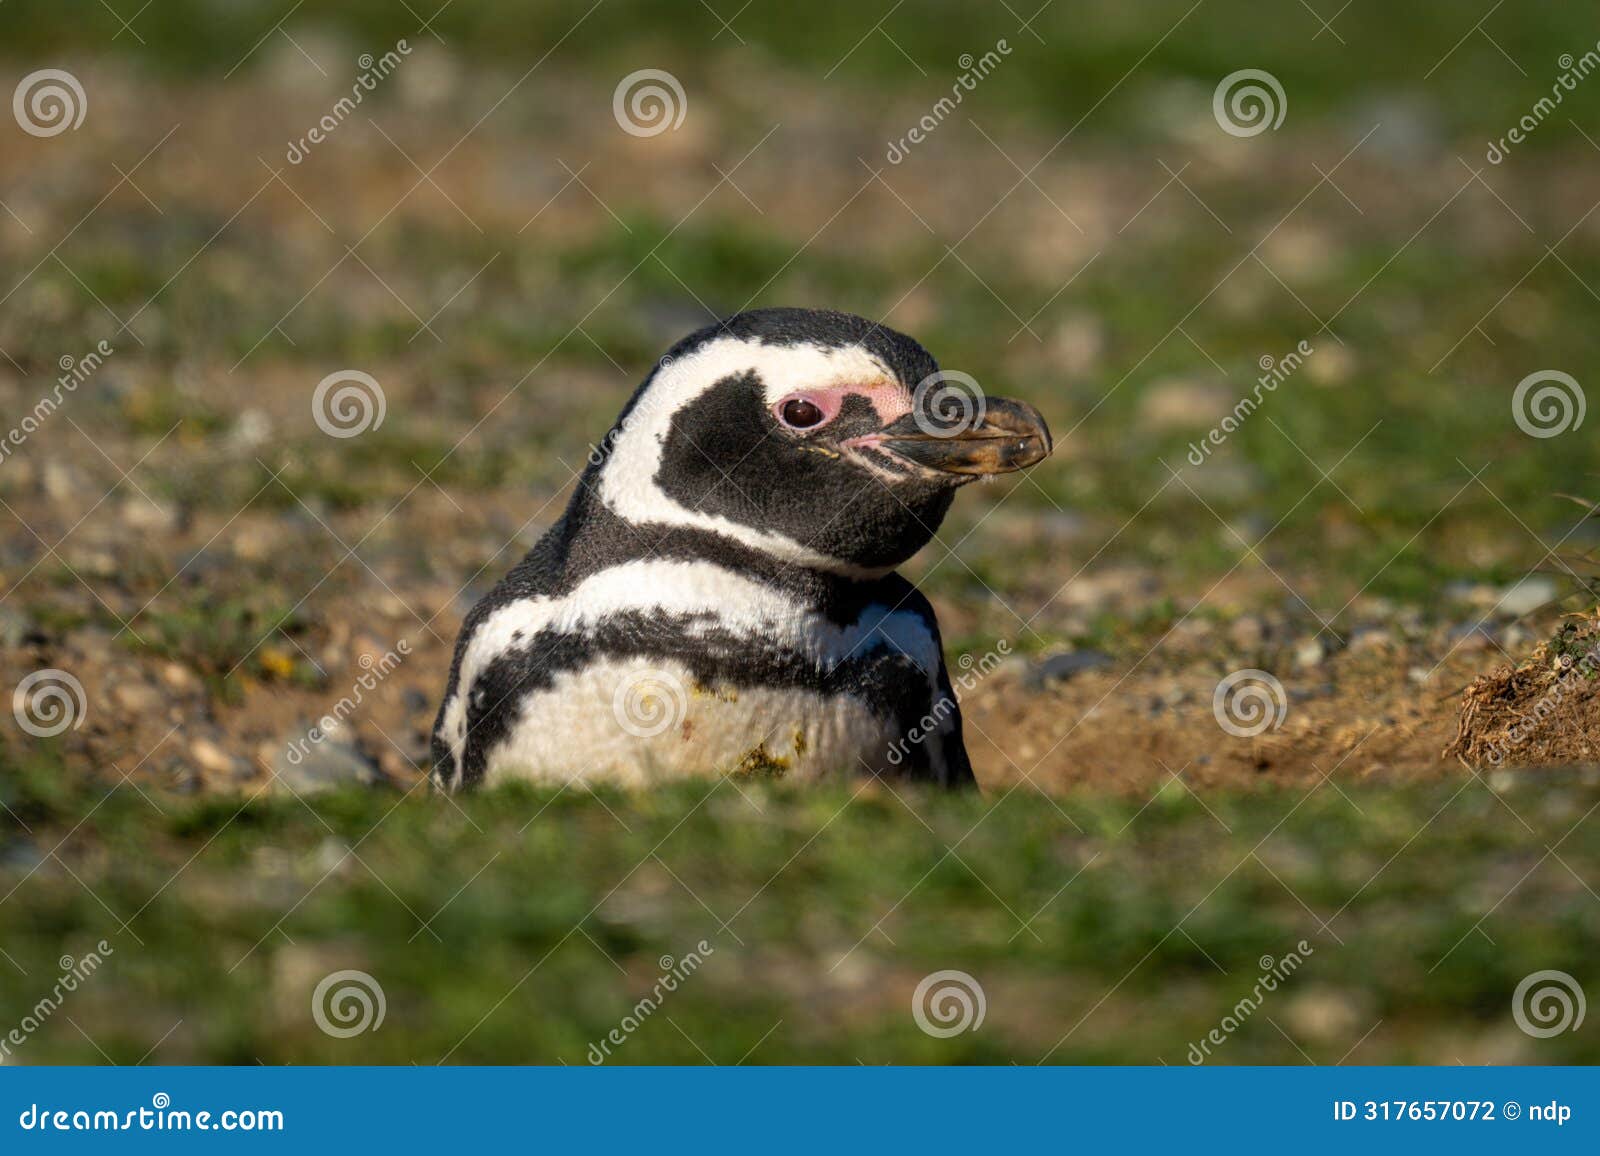 magellanic penguin with catchlight nestles in burrow